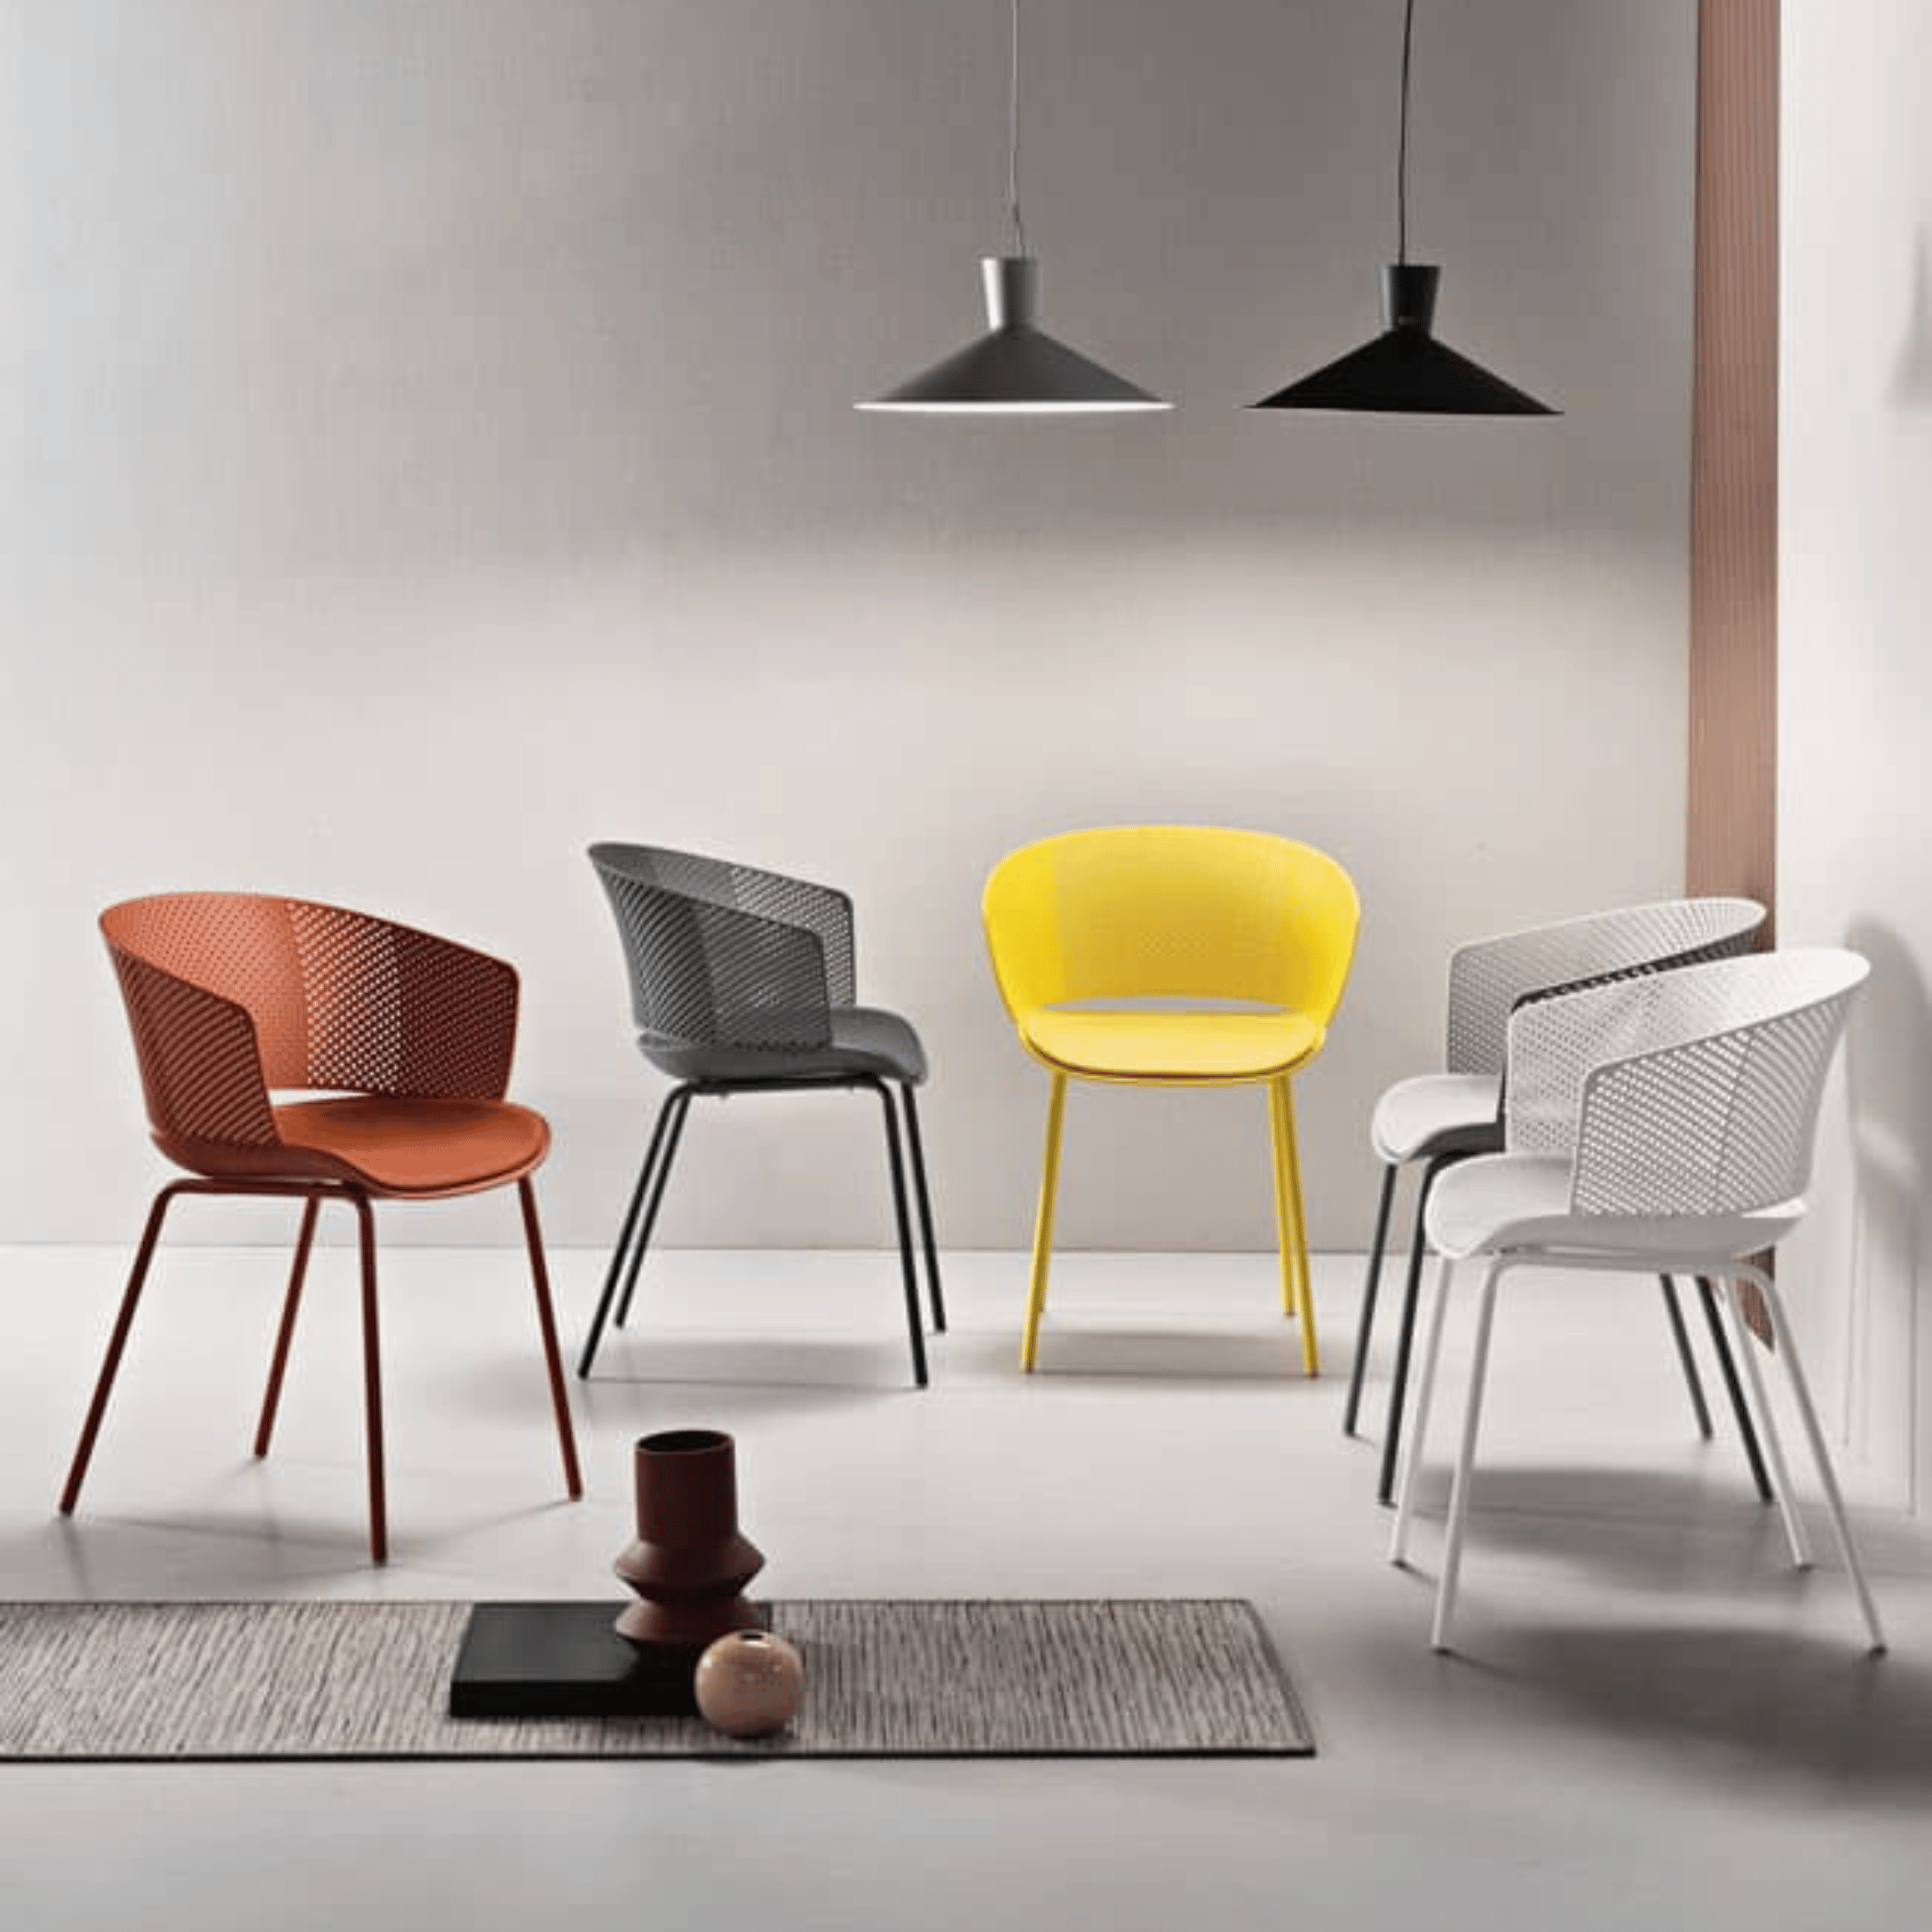 Set sedie moderne in polipropilene "Cutolo" con seduta imbottita cm 59x53 78h